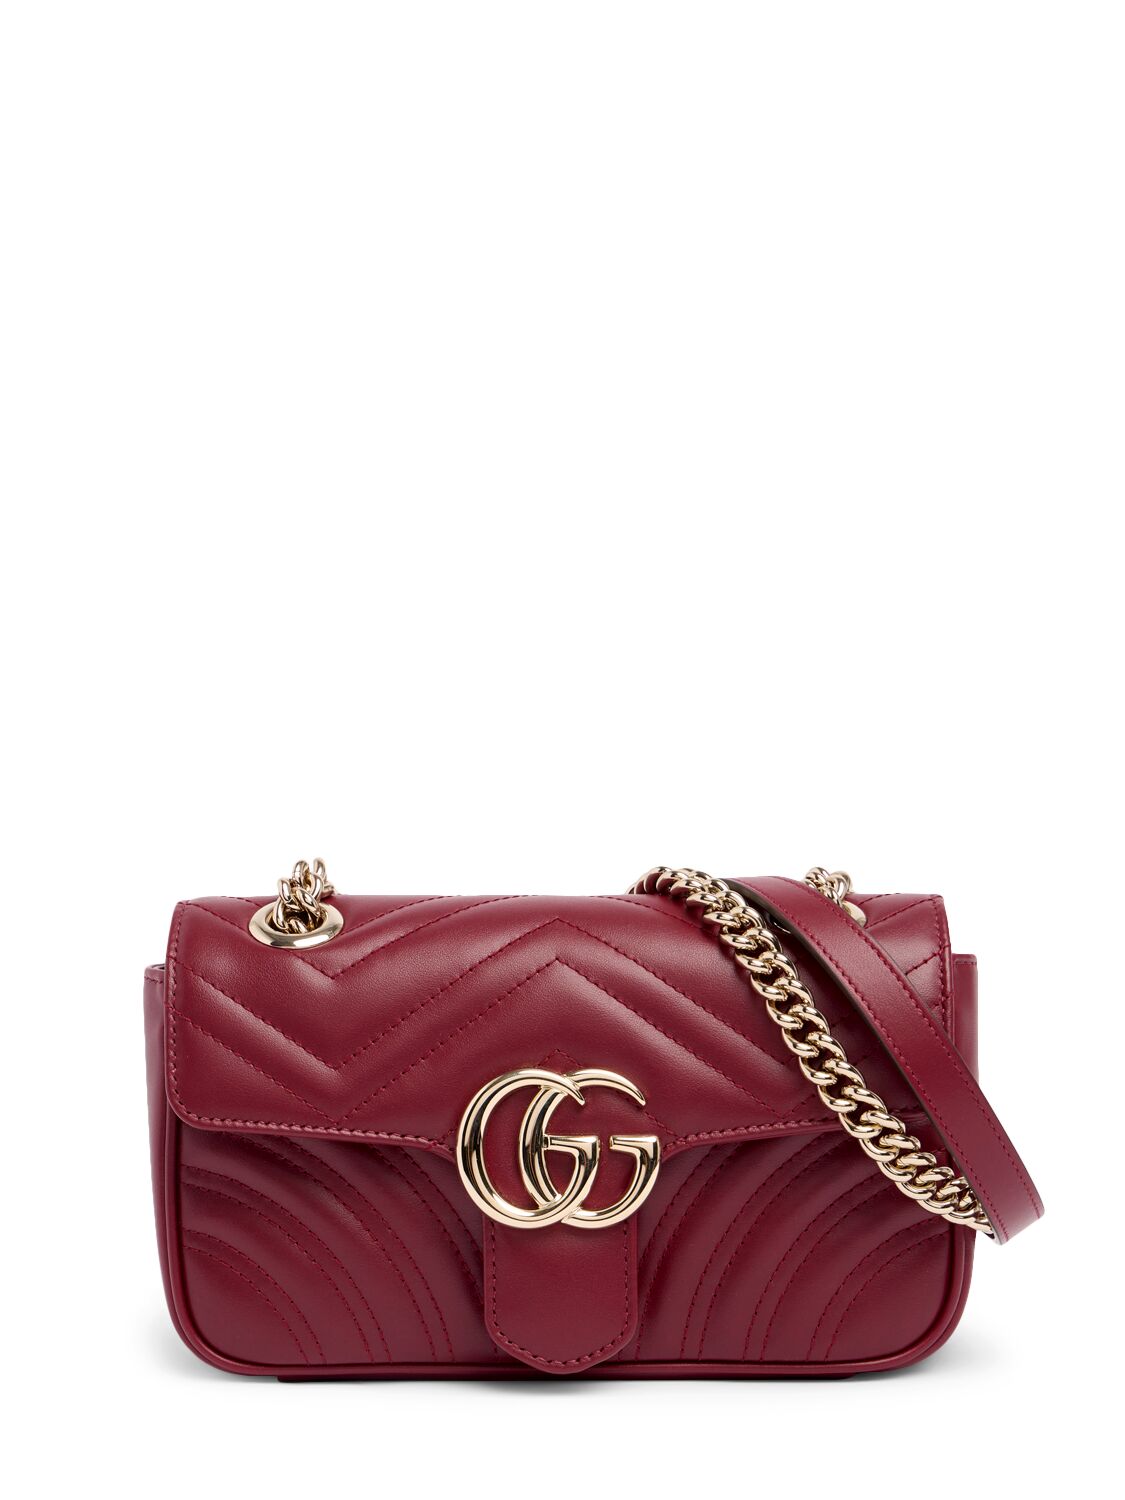 Gucci Gg Marmont Leather Shoulder Bag In Burgundy